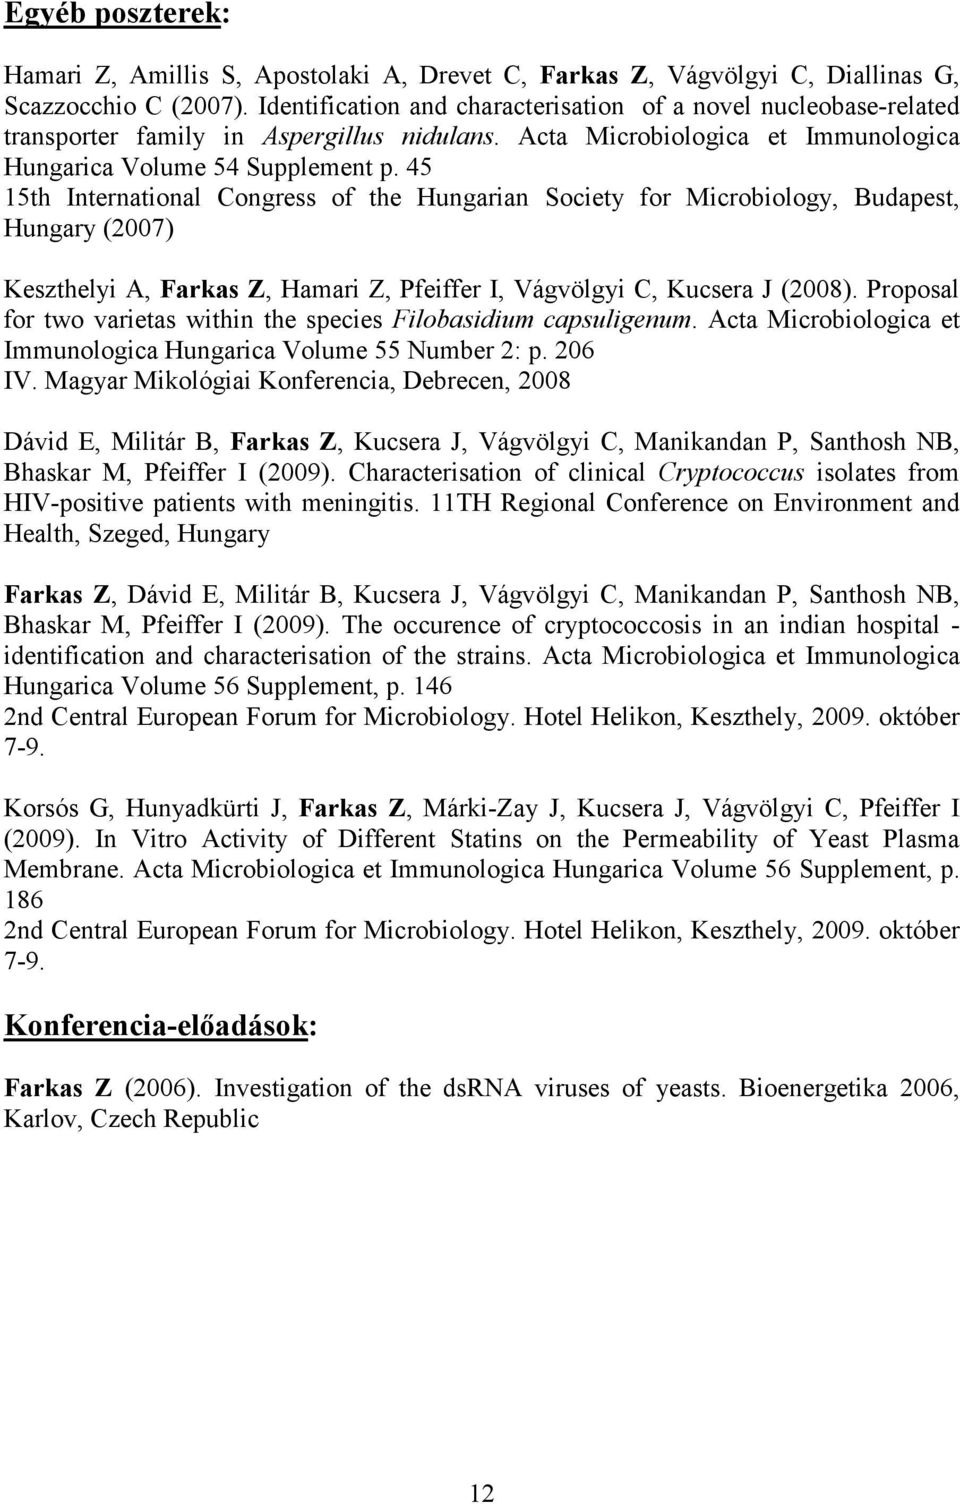 45 15th International Congress of the Hungarian Society for Microbiology, Budapest, Hungary (2007) Keszthelyi A, Farkas Z, Hamari Z, Pfeiffer I, Vágvölgyi C, Kucsera J (2008).